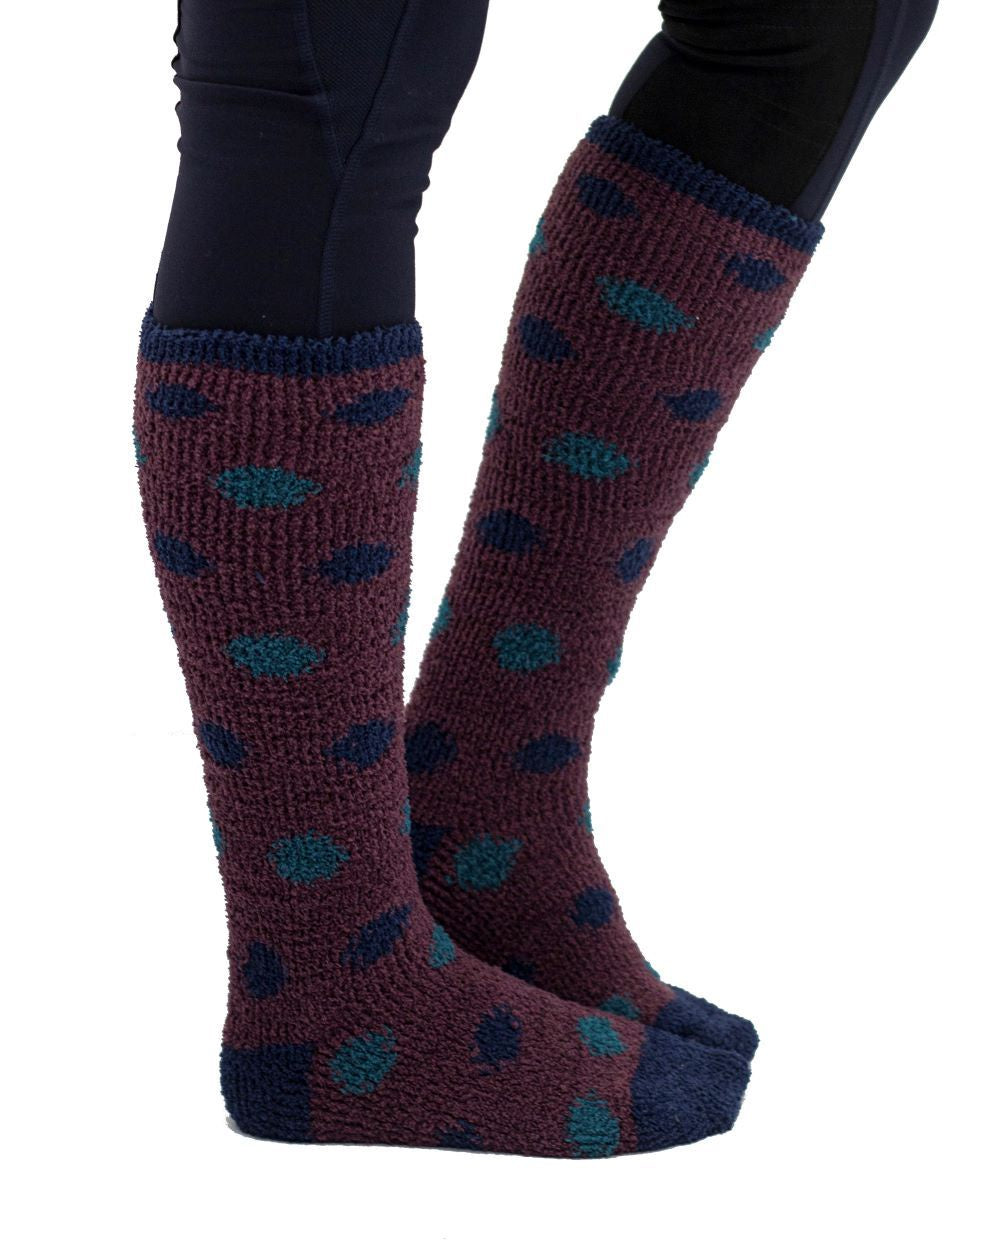 Softie Socks by Horseware